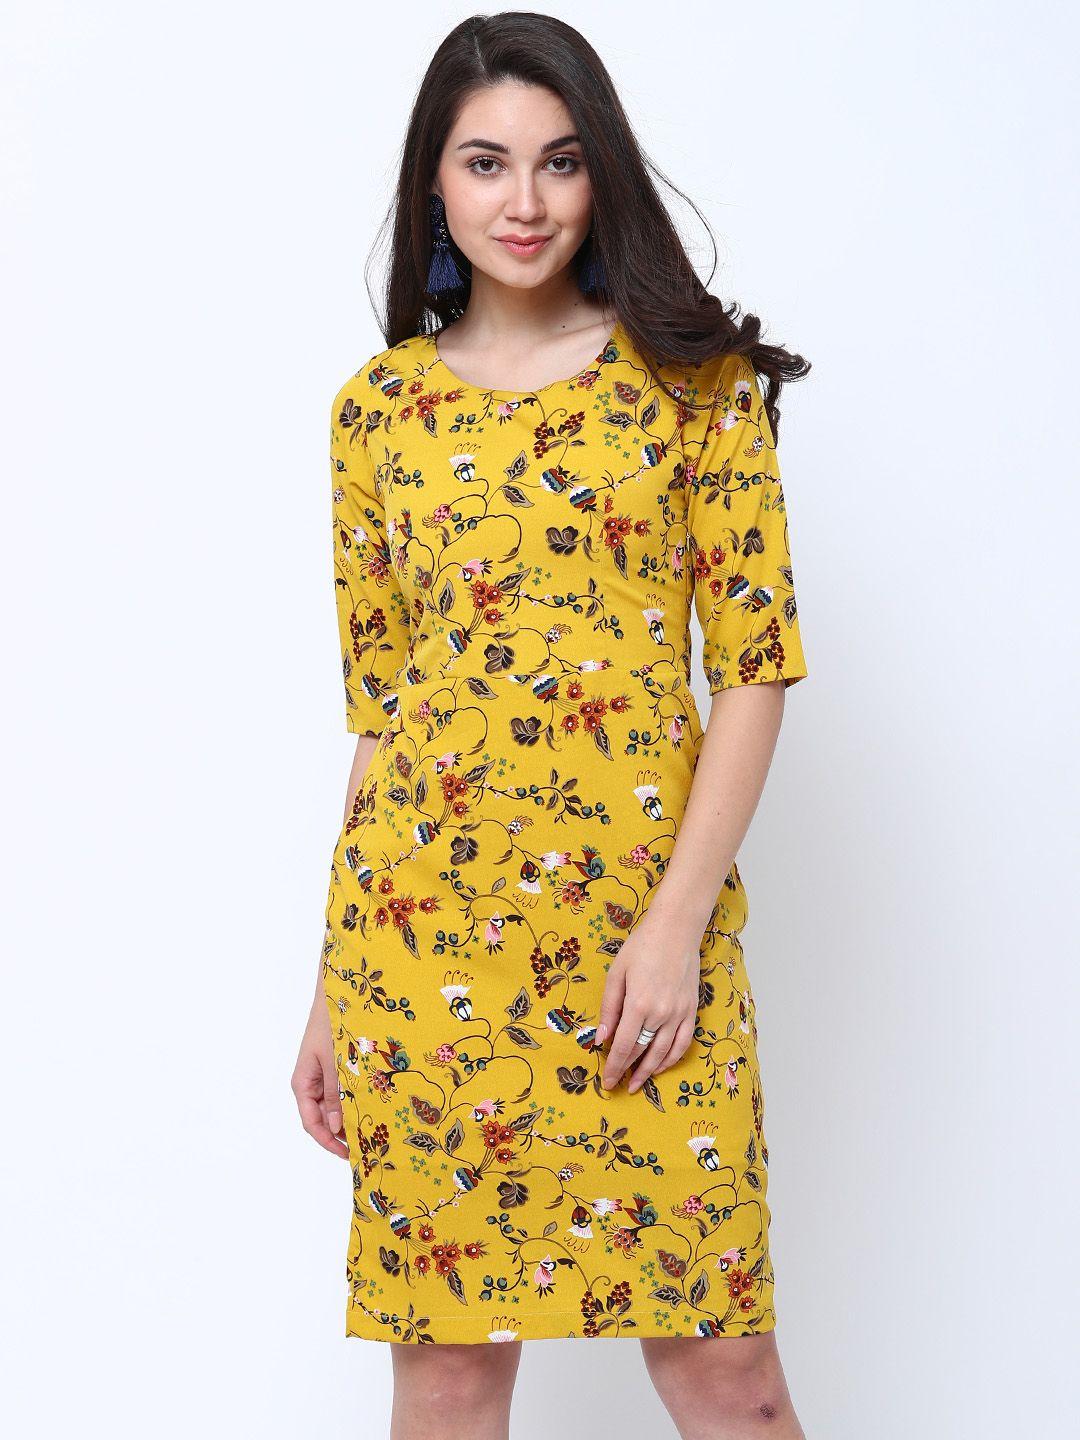 tokyo-talkies-women-yellow-&-orange-printed-sheath-dress